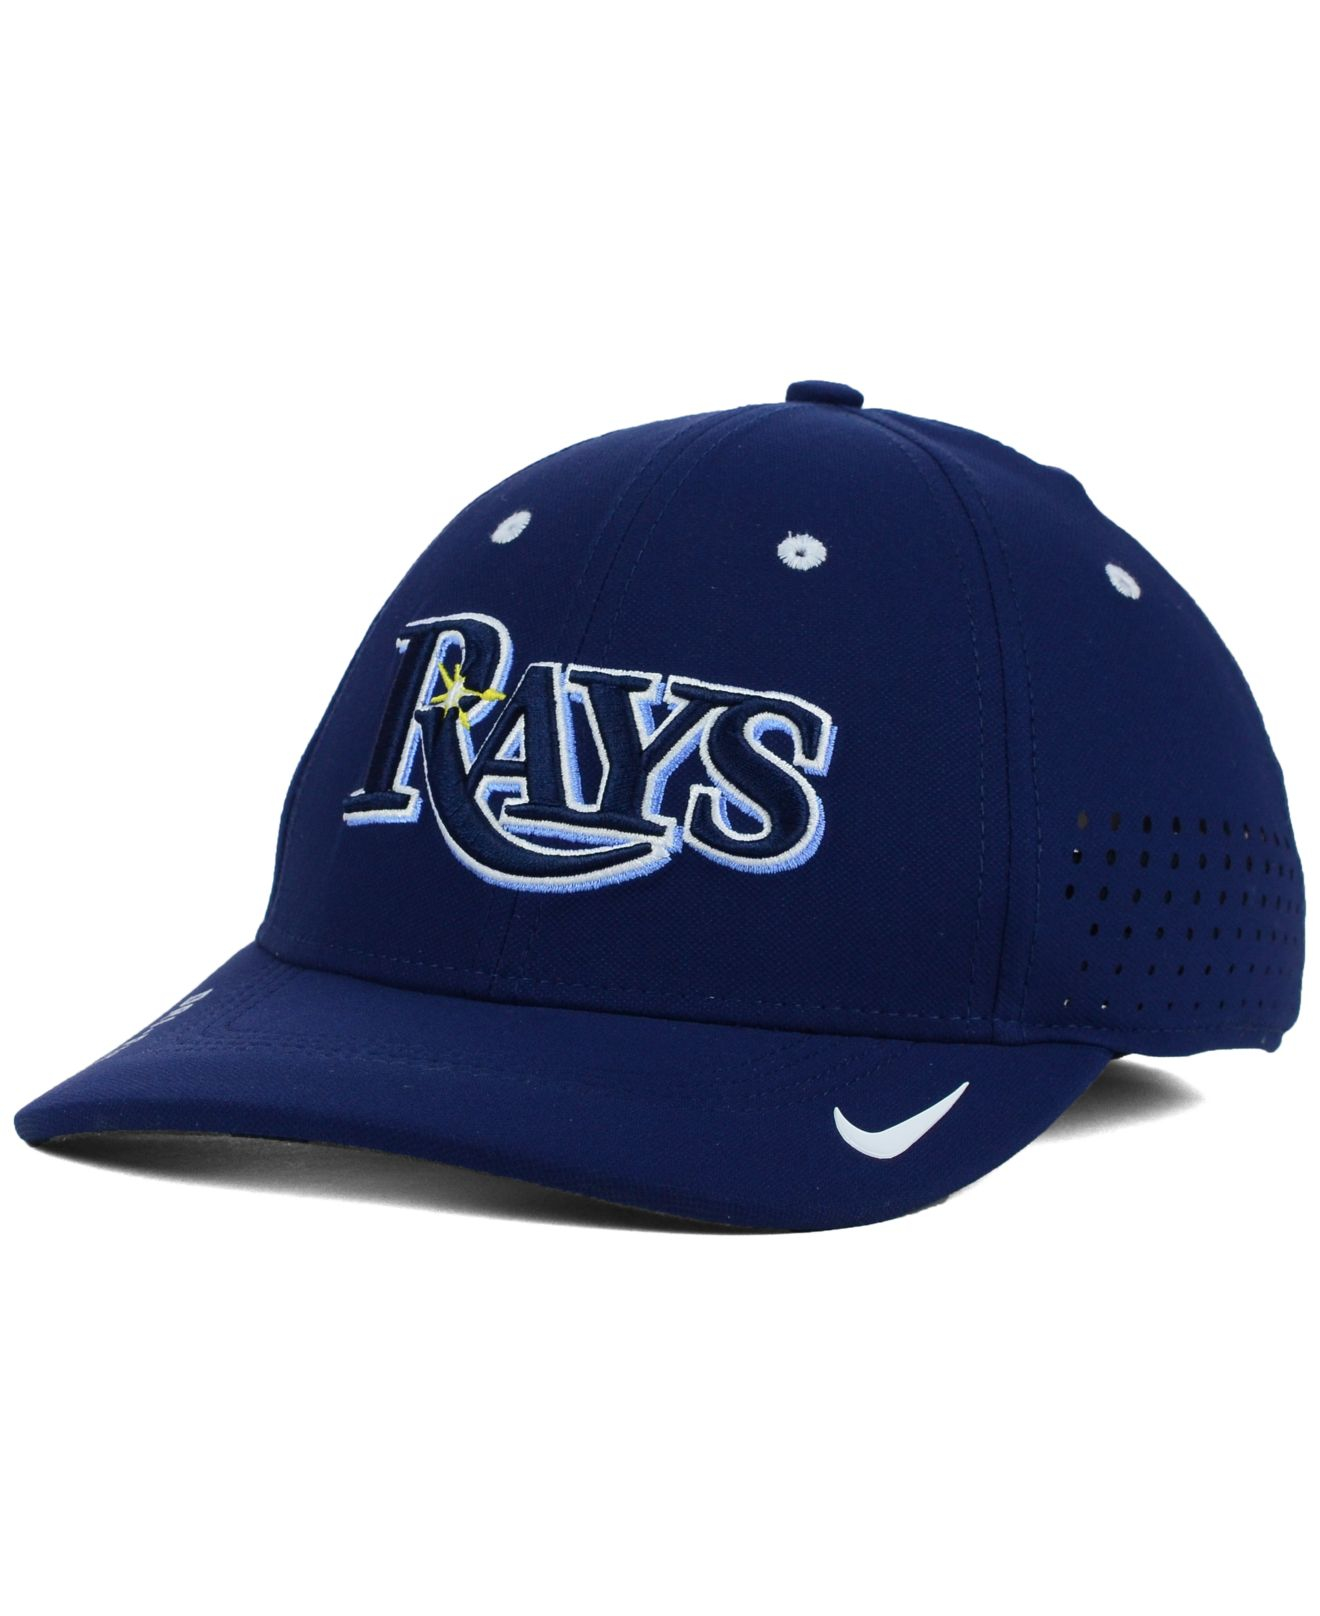 Nike Tampa Bay Rays Vapor Swoosh Flex Cap in Blue for Men - Lyst